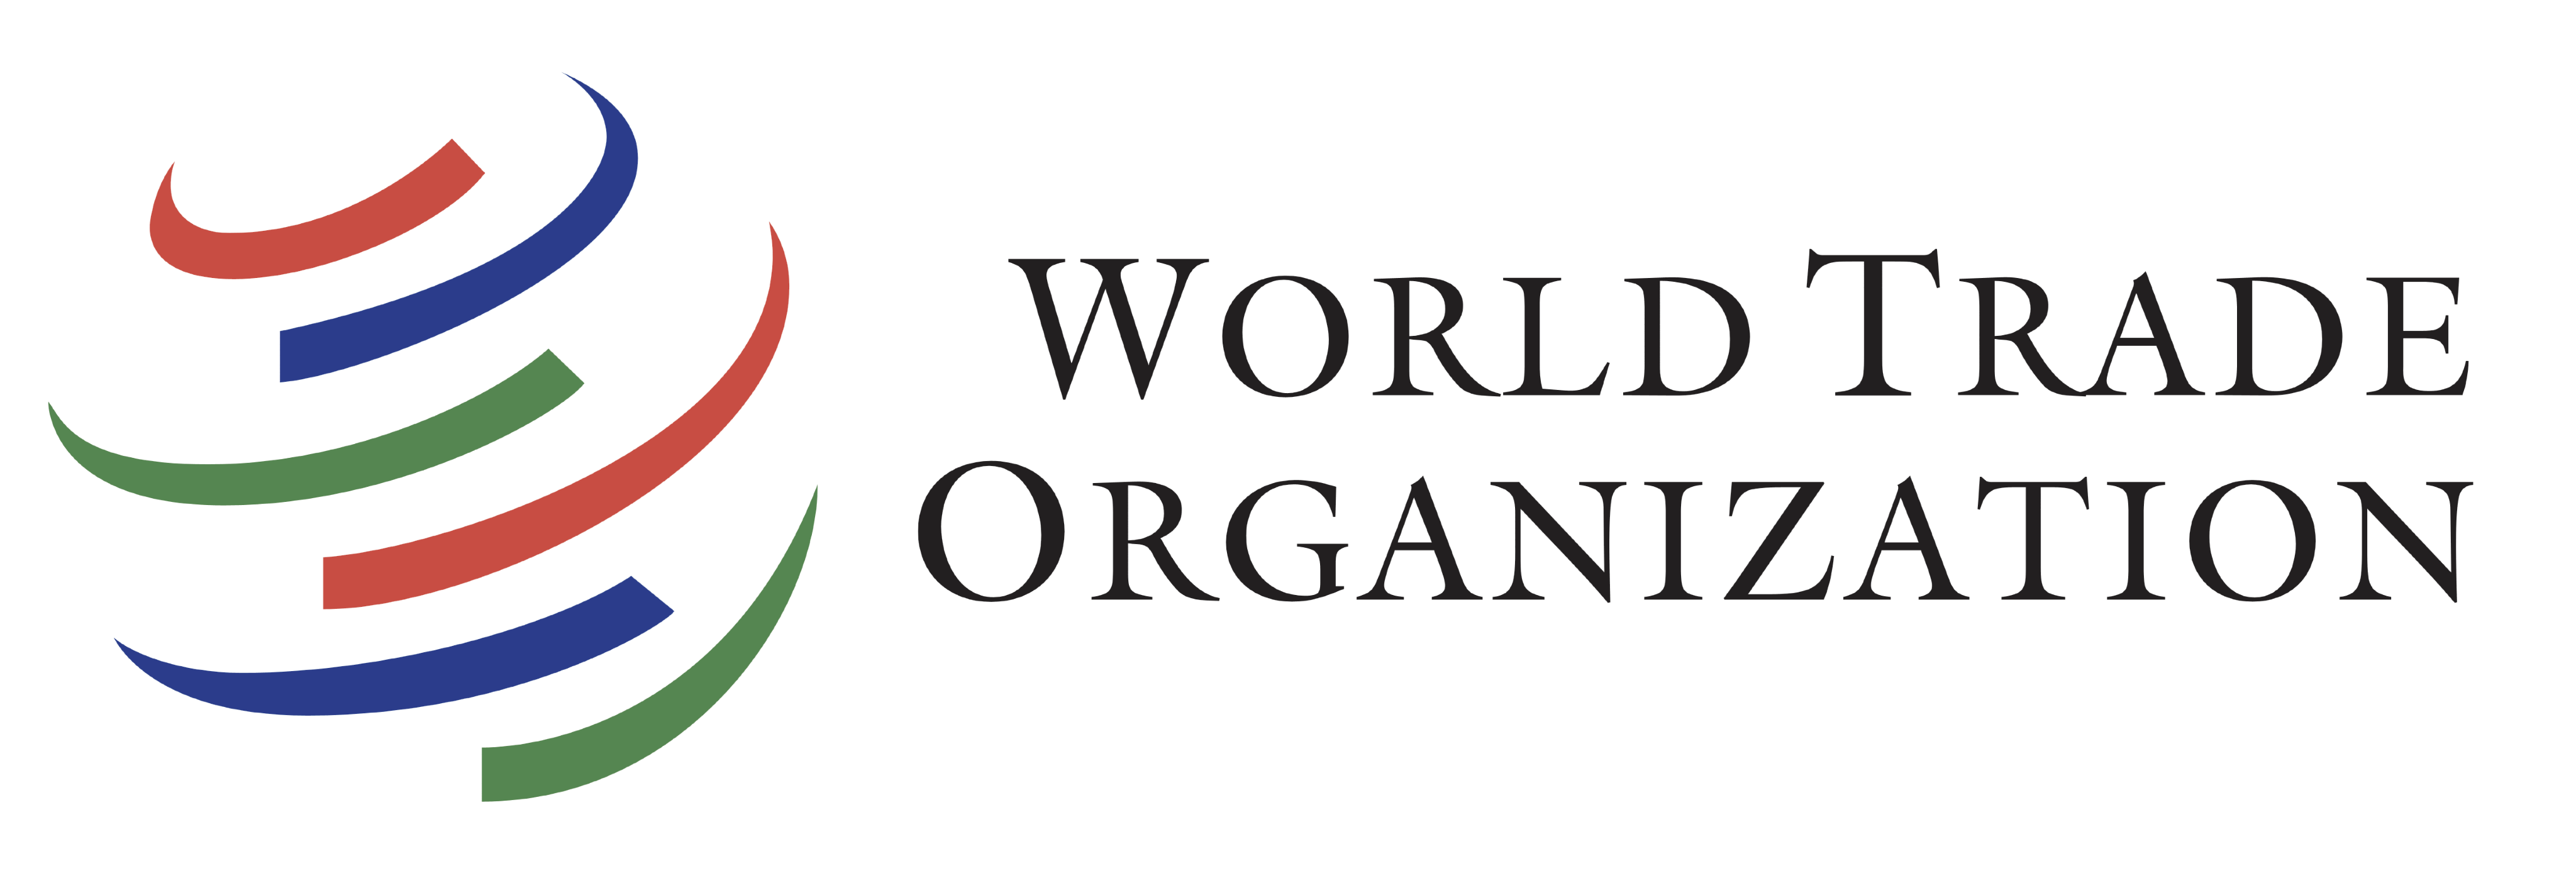 world trade organisation logo, speaking engagements